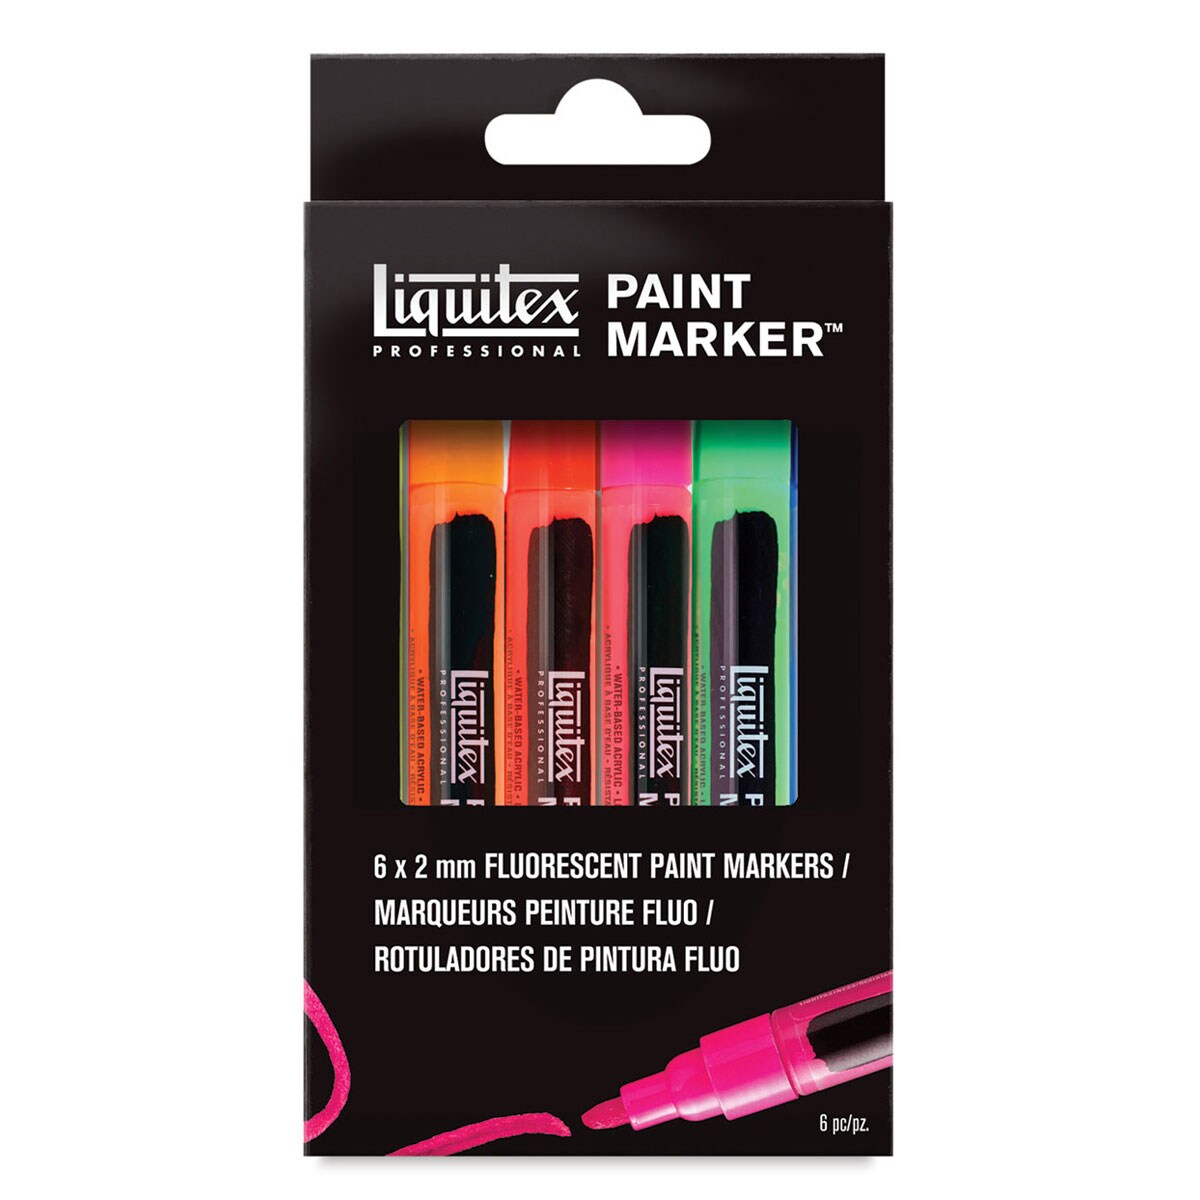 Liquitex Paint Marker - Fluorescent Colors, 2mm Tip, Set of 6